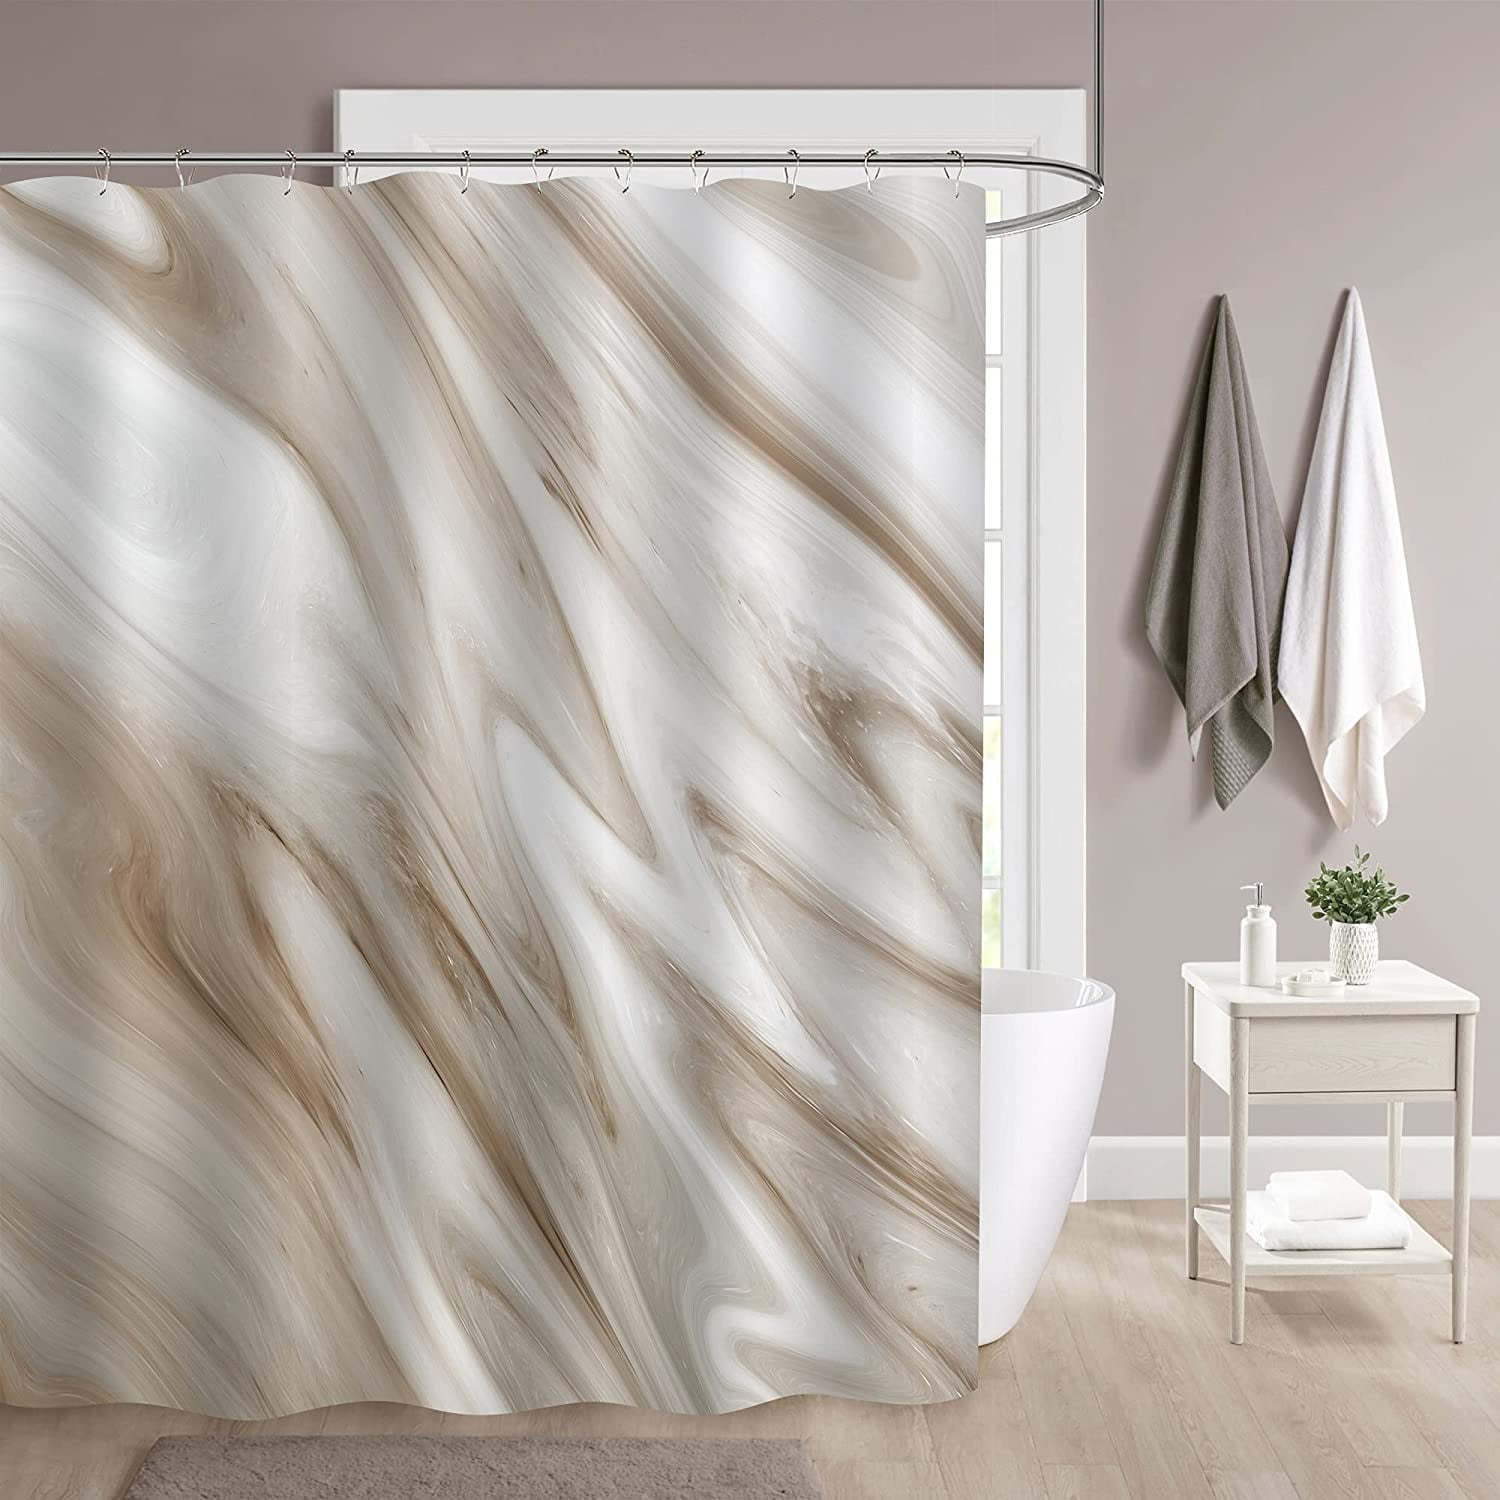 Abstract Pattern Shower Curtain Set Waterproof Fabric Bathroom Decor w/ Hooks 